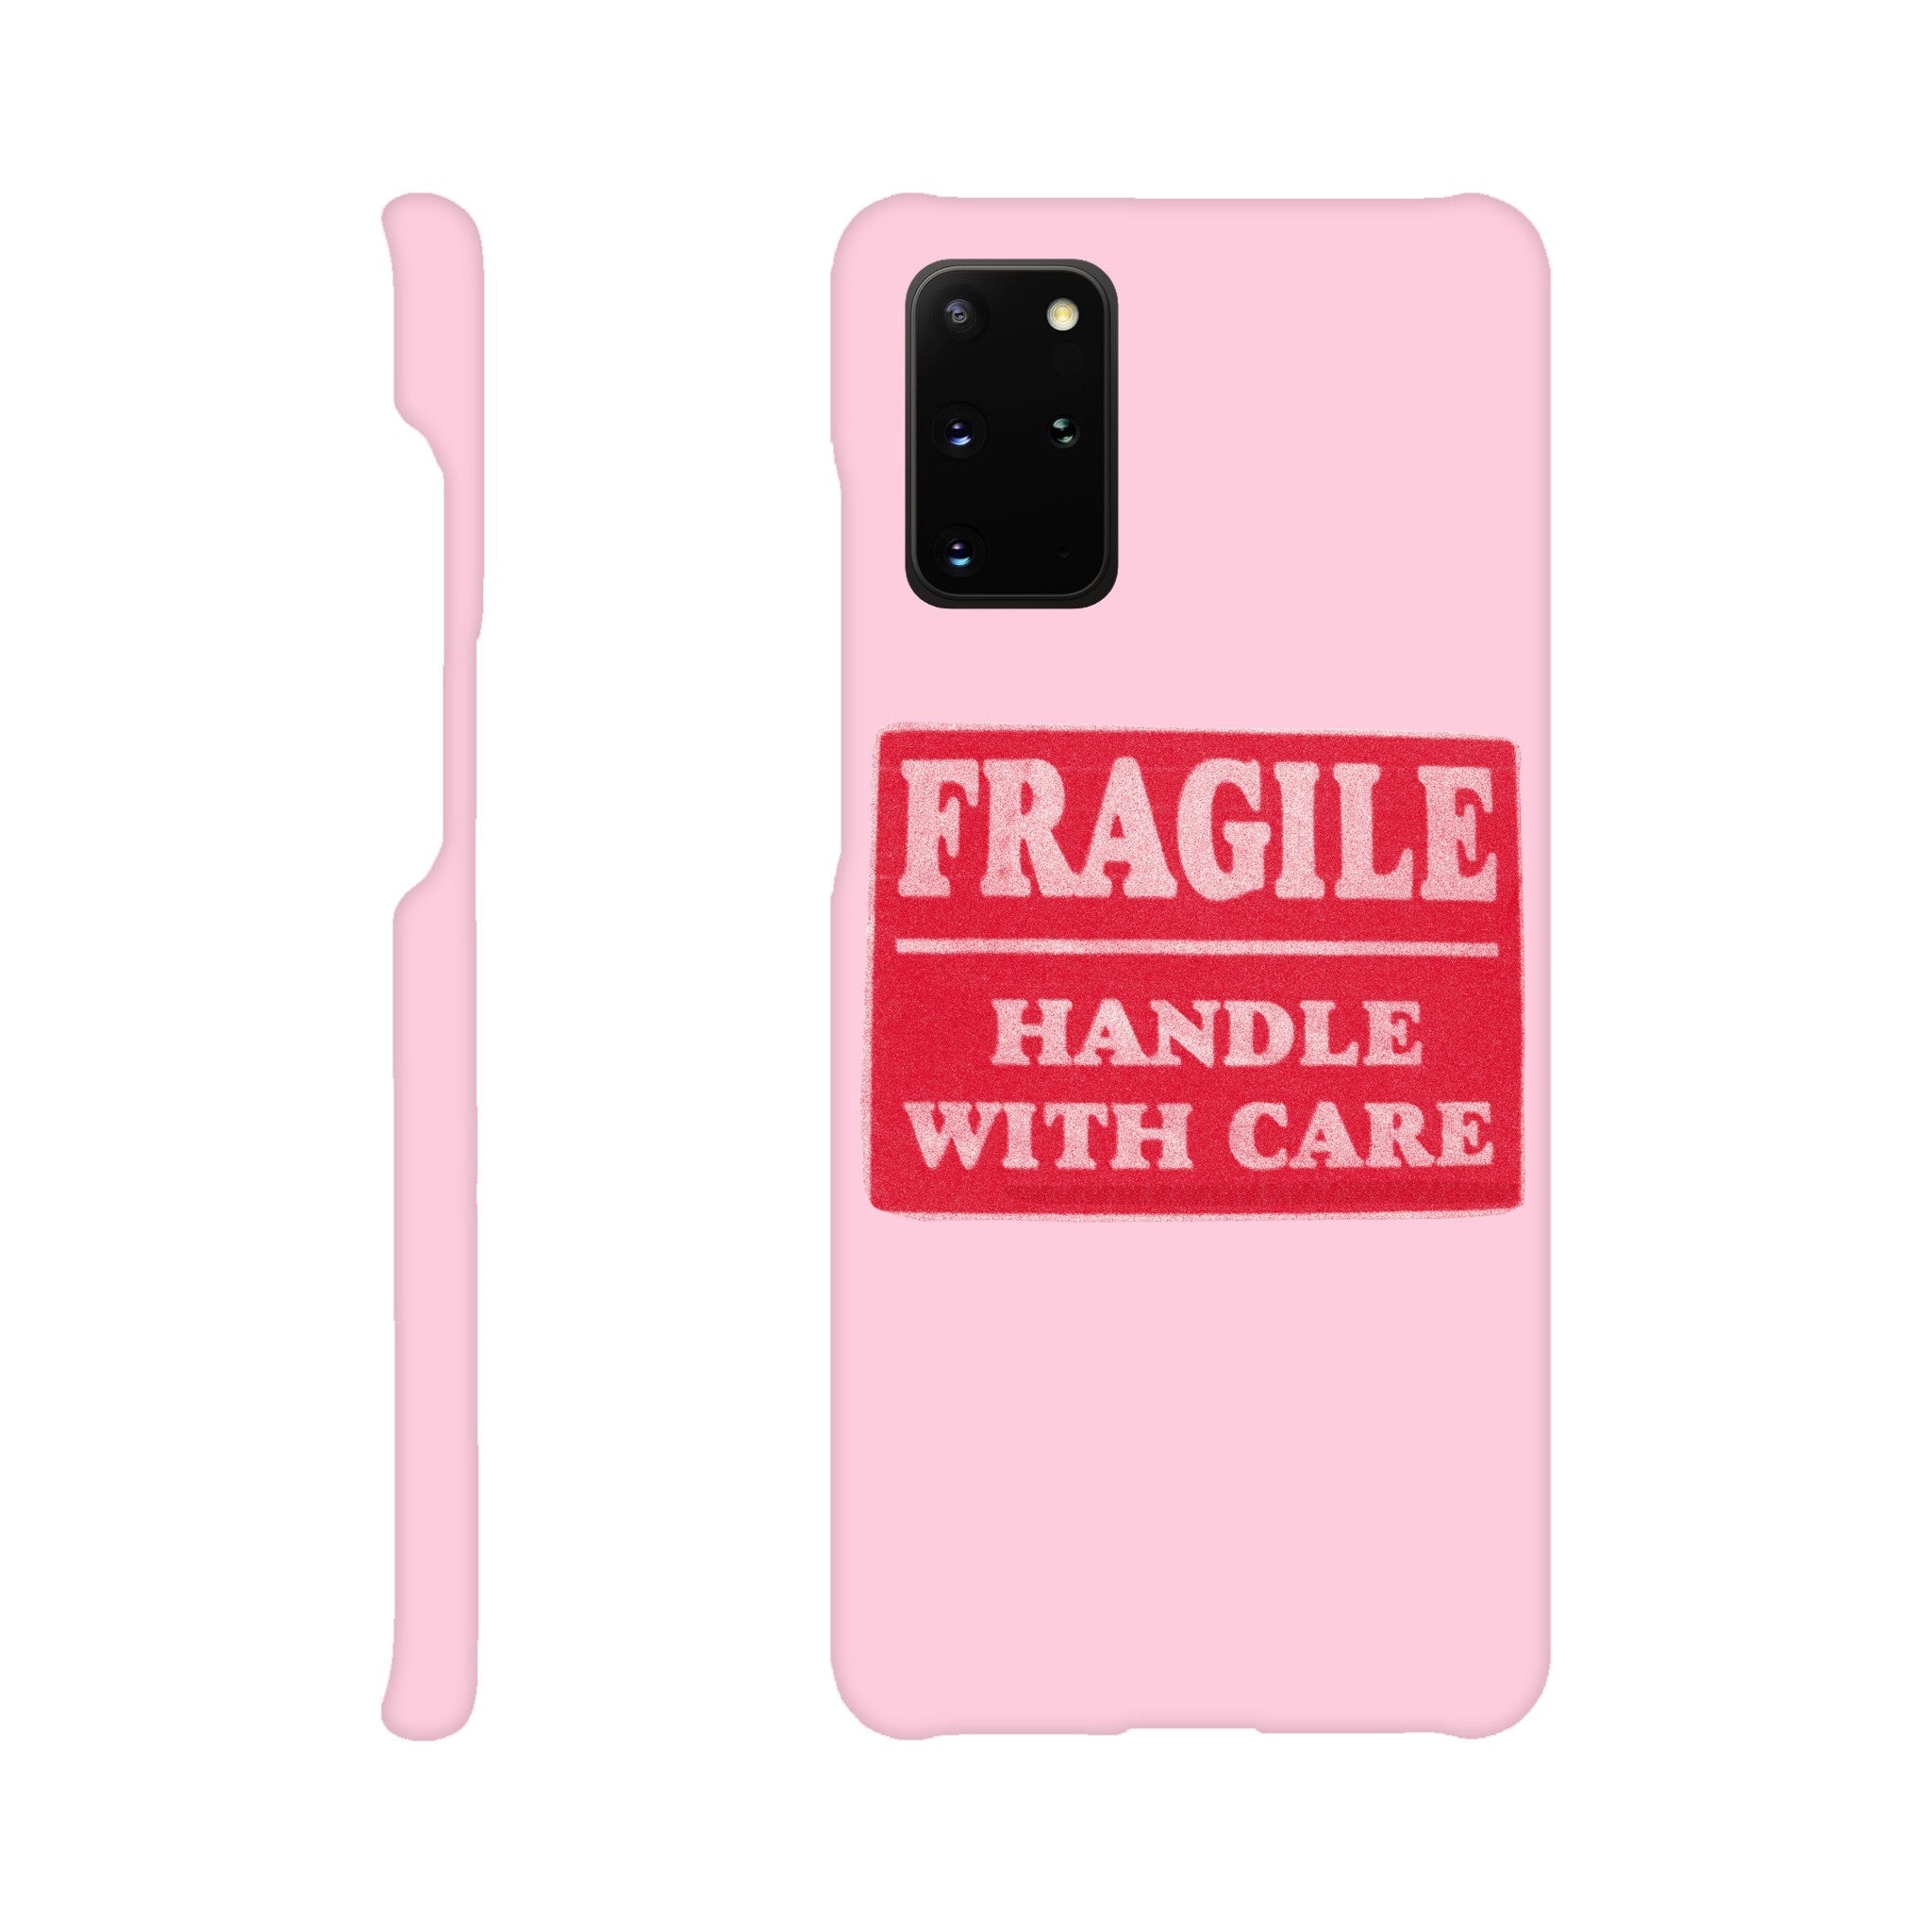 'Fragile' phone case - In Print We Trust